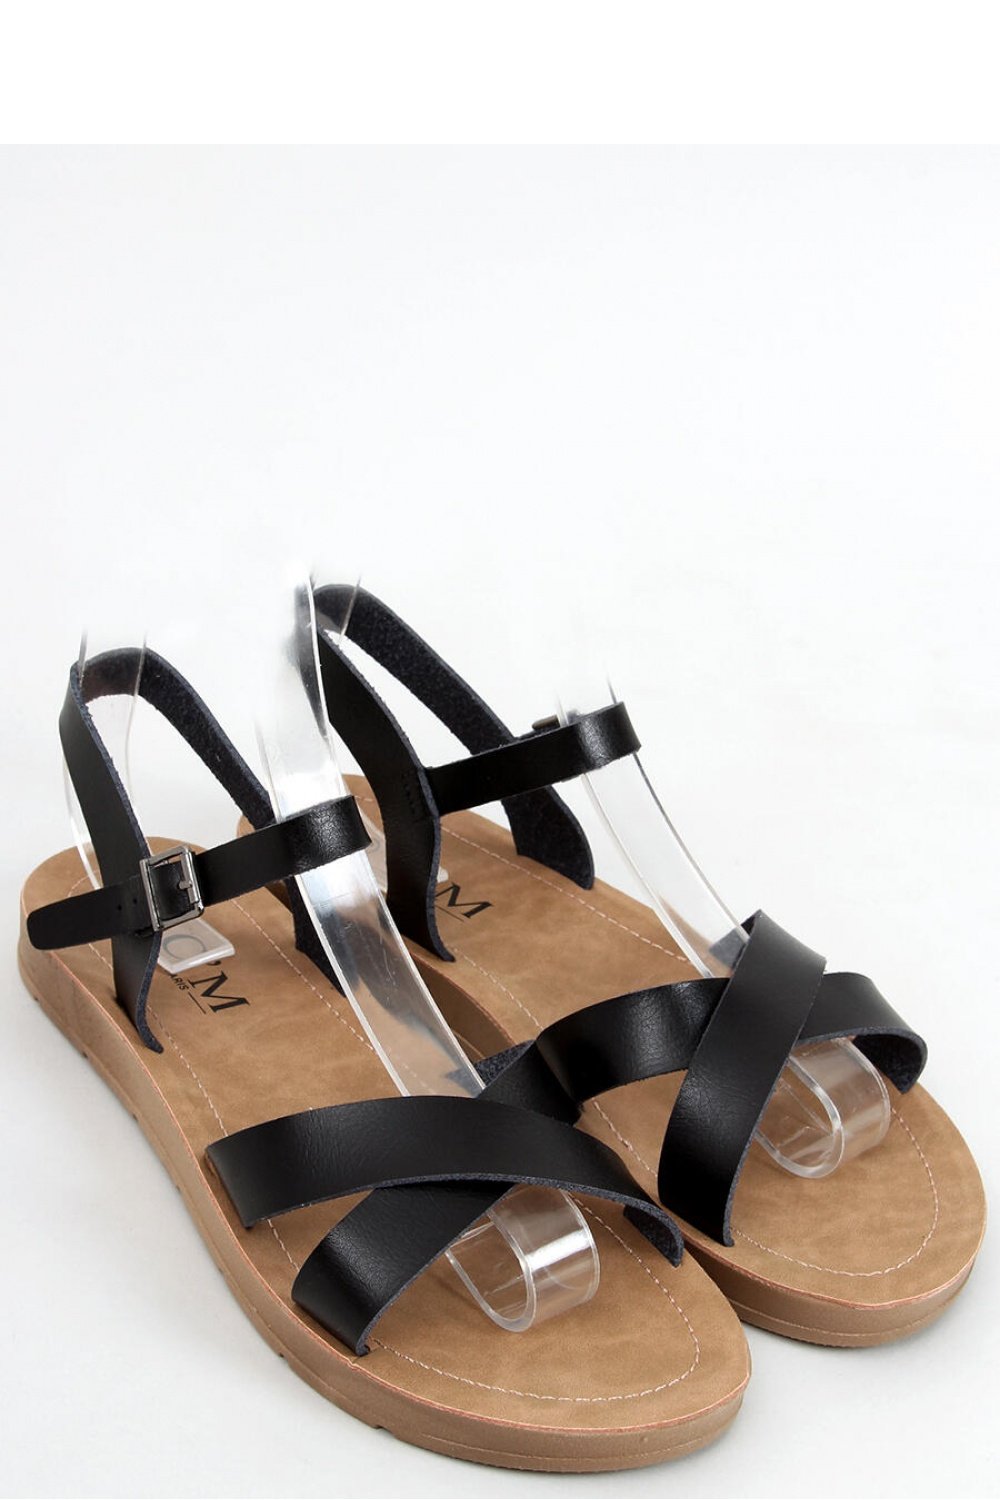 Sandals model 166568 Inello Posh Styles Apparel